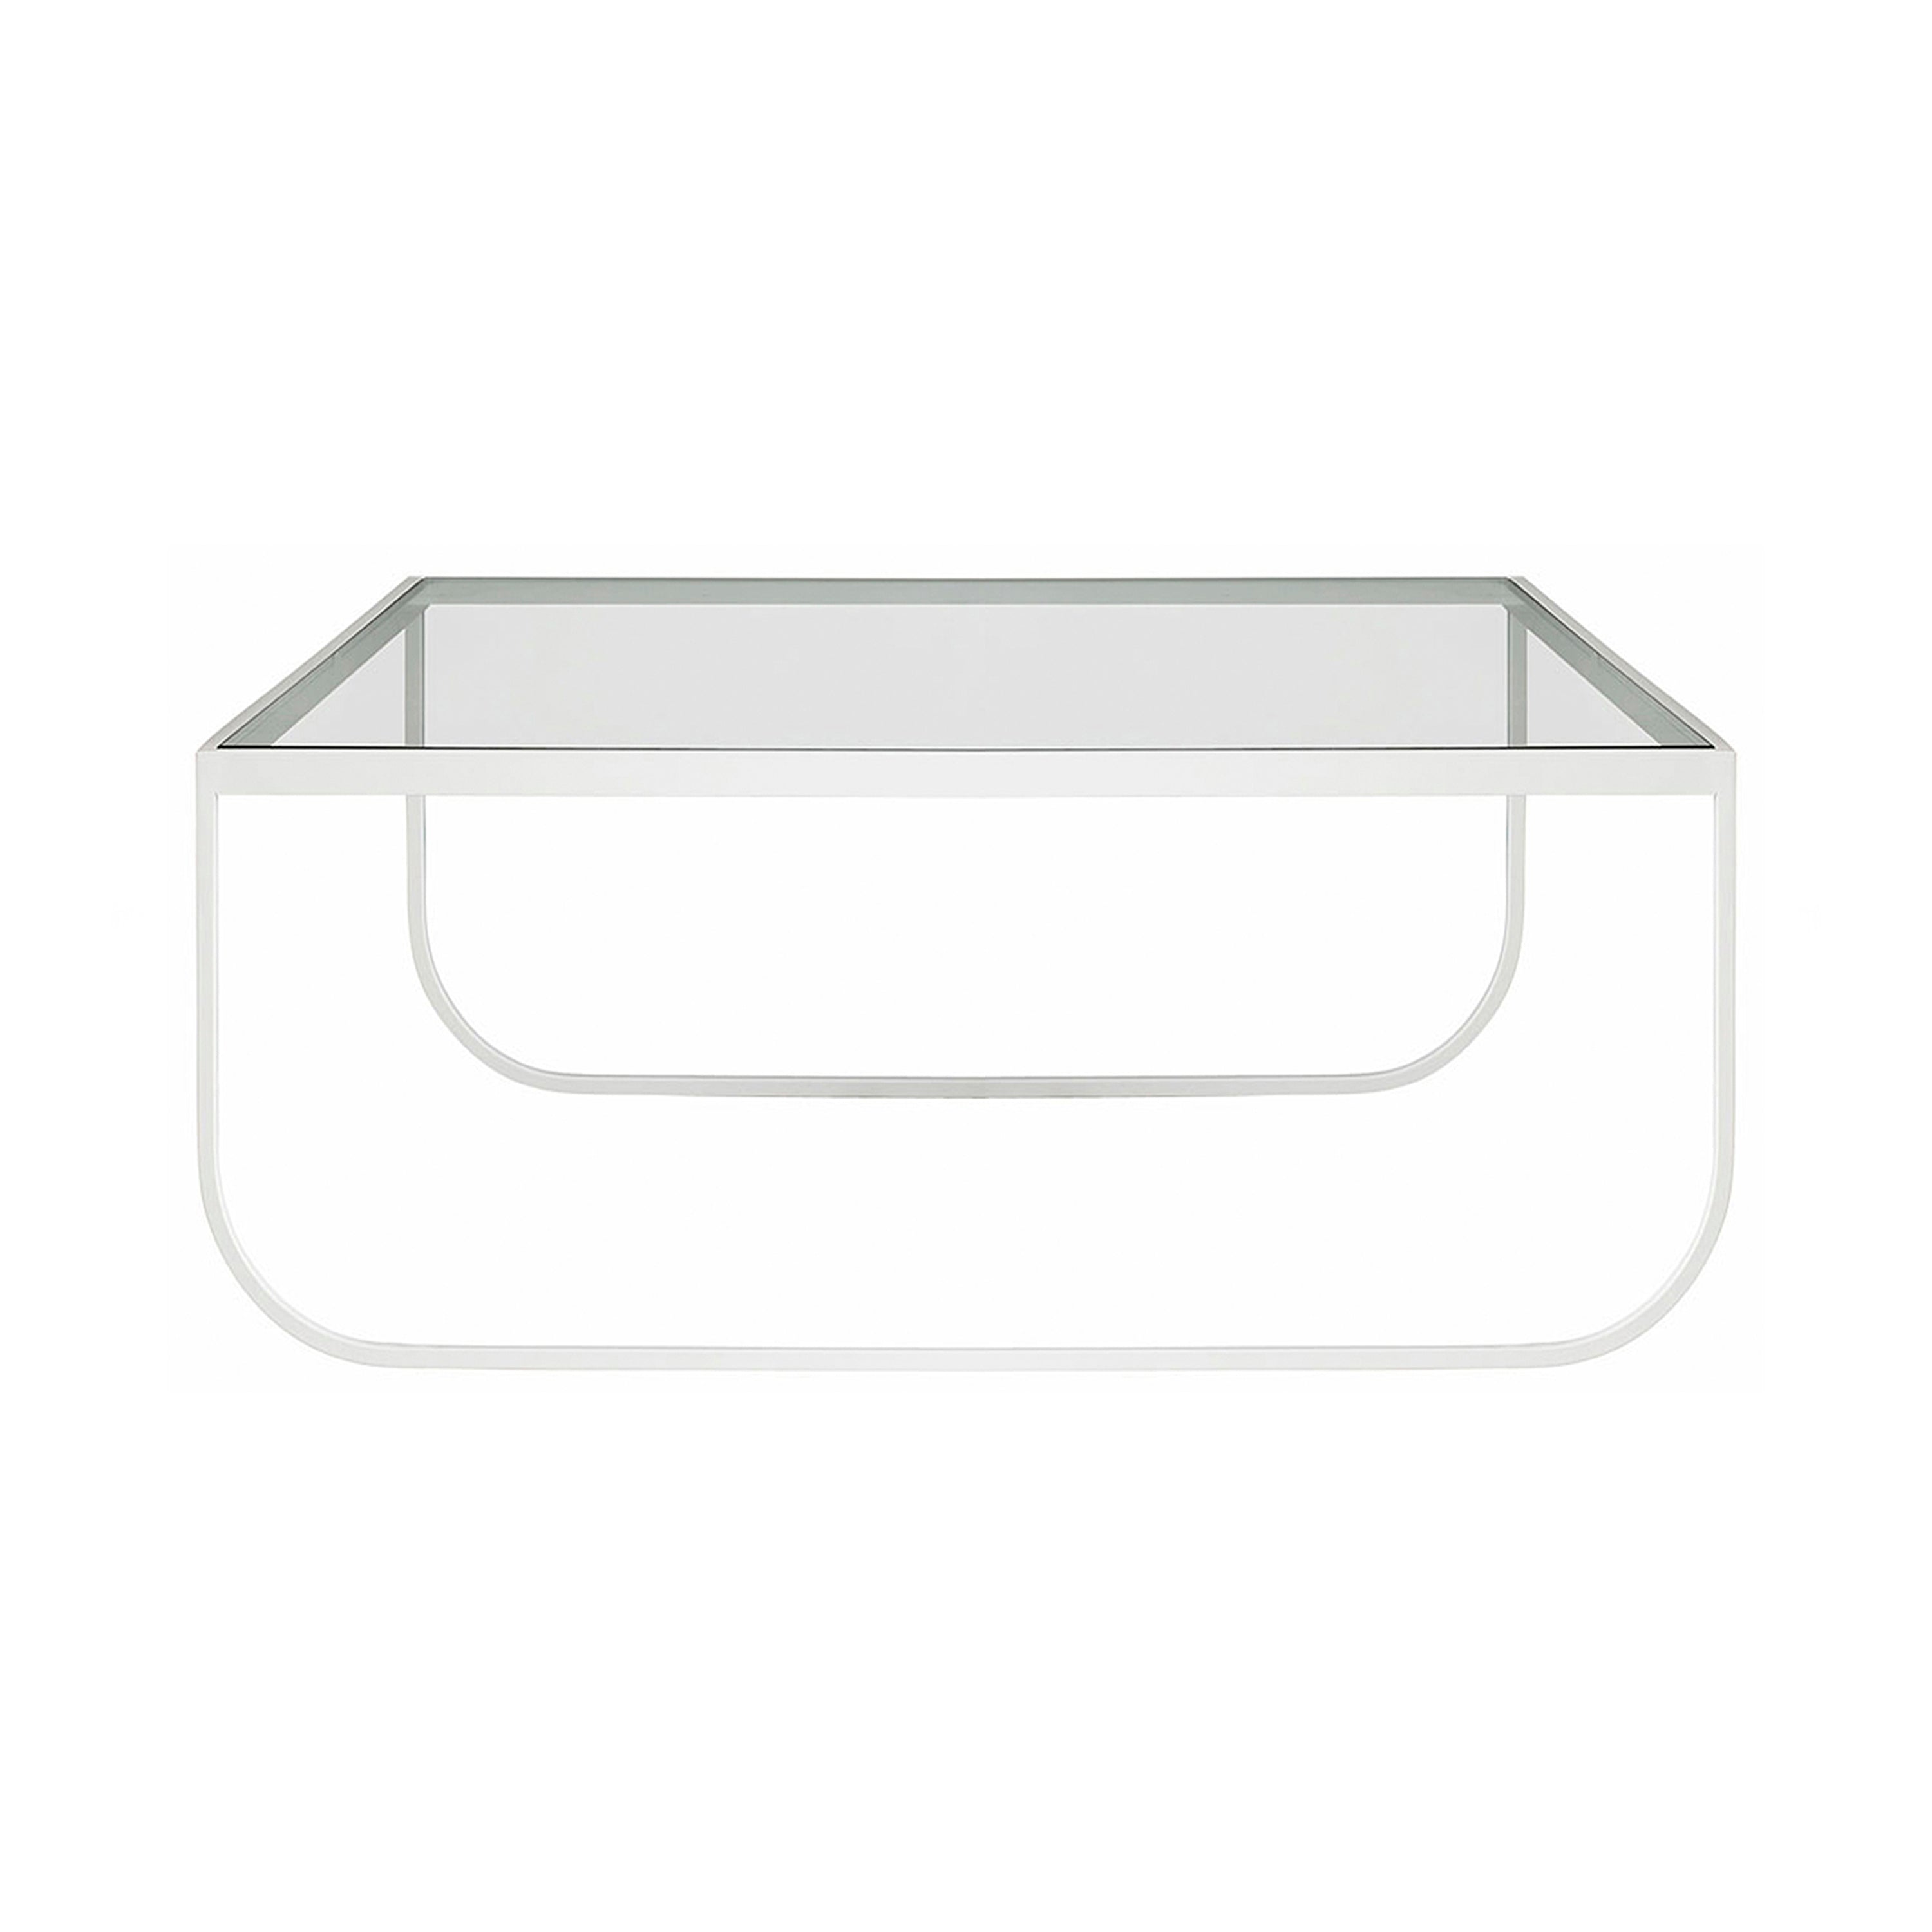 Tati Coffee Table: High + Glass Top + Transparent Glass + White